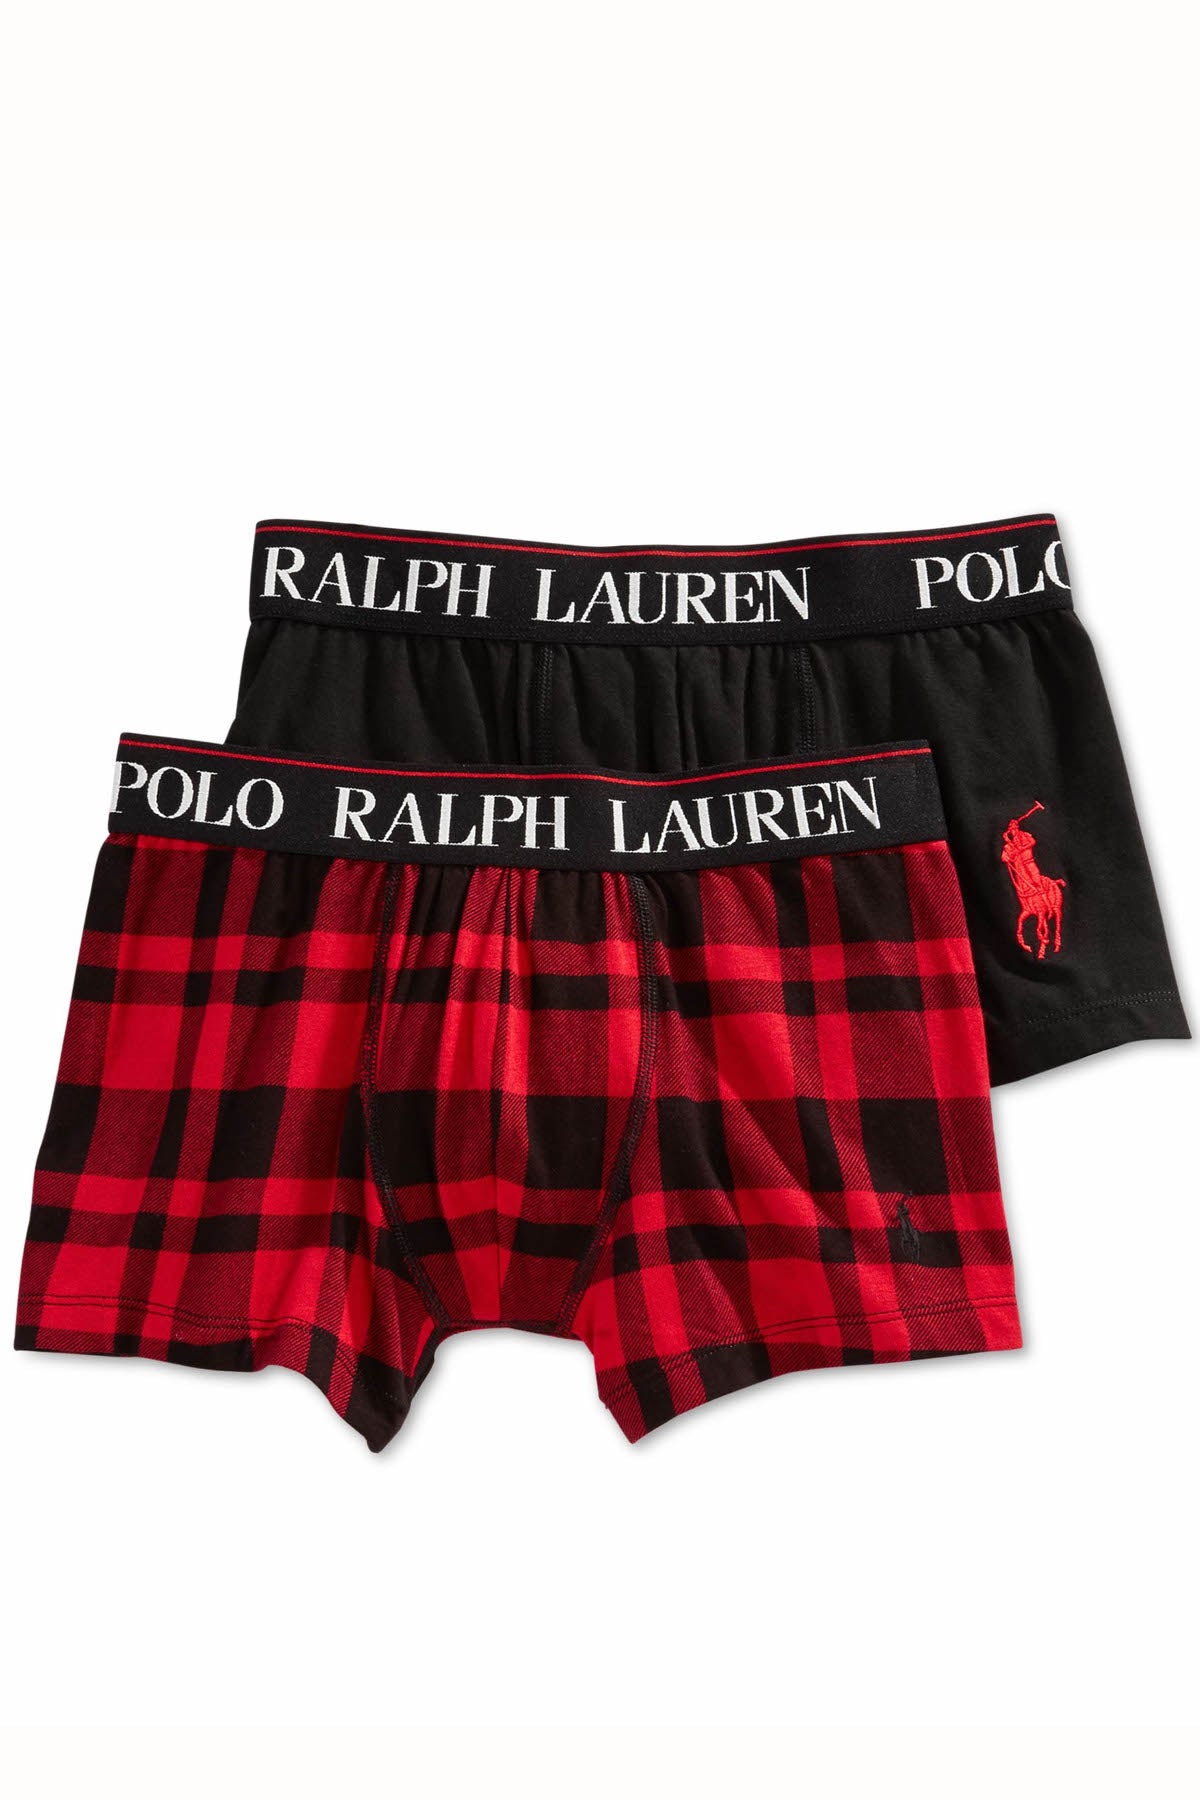 Polo Ralph Lauren Black & Red Plaid Boxer Brief 2-Pack